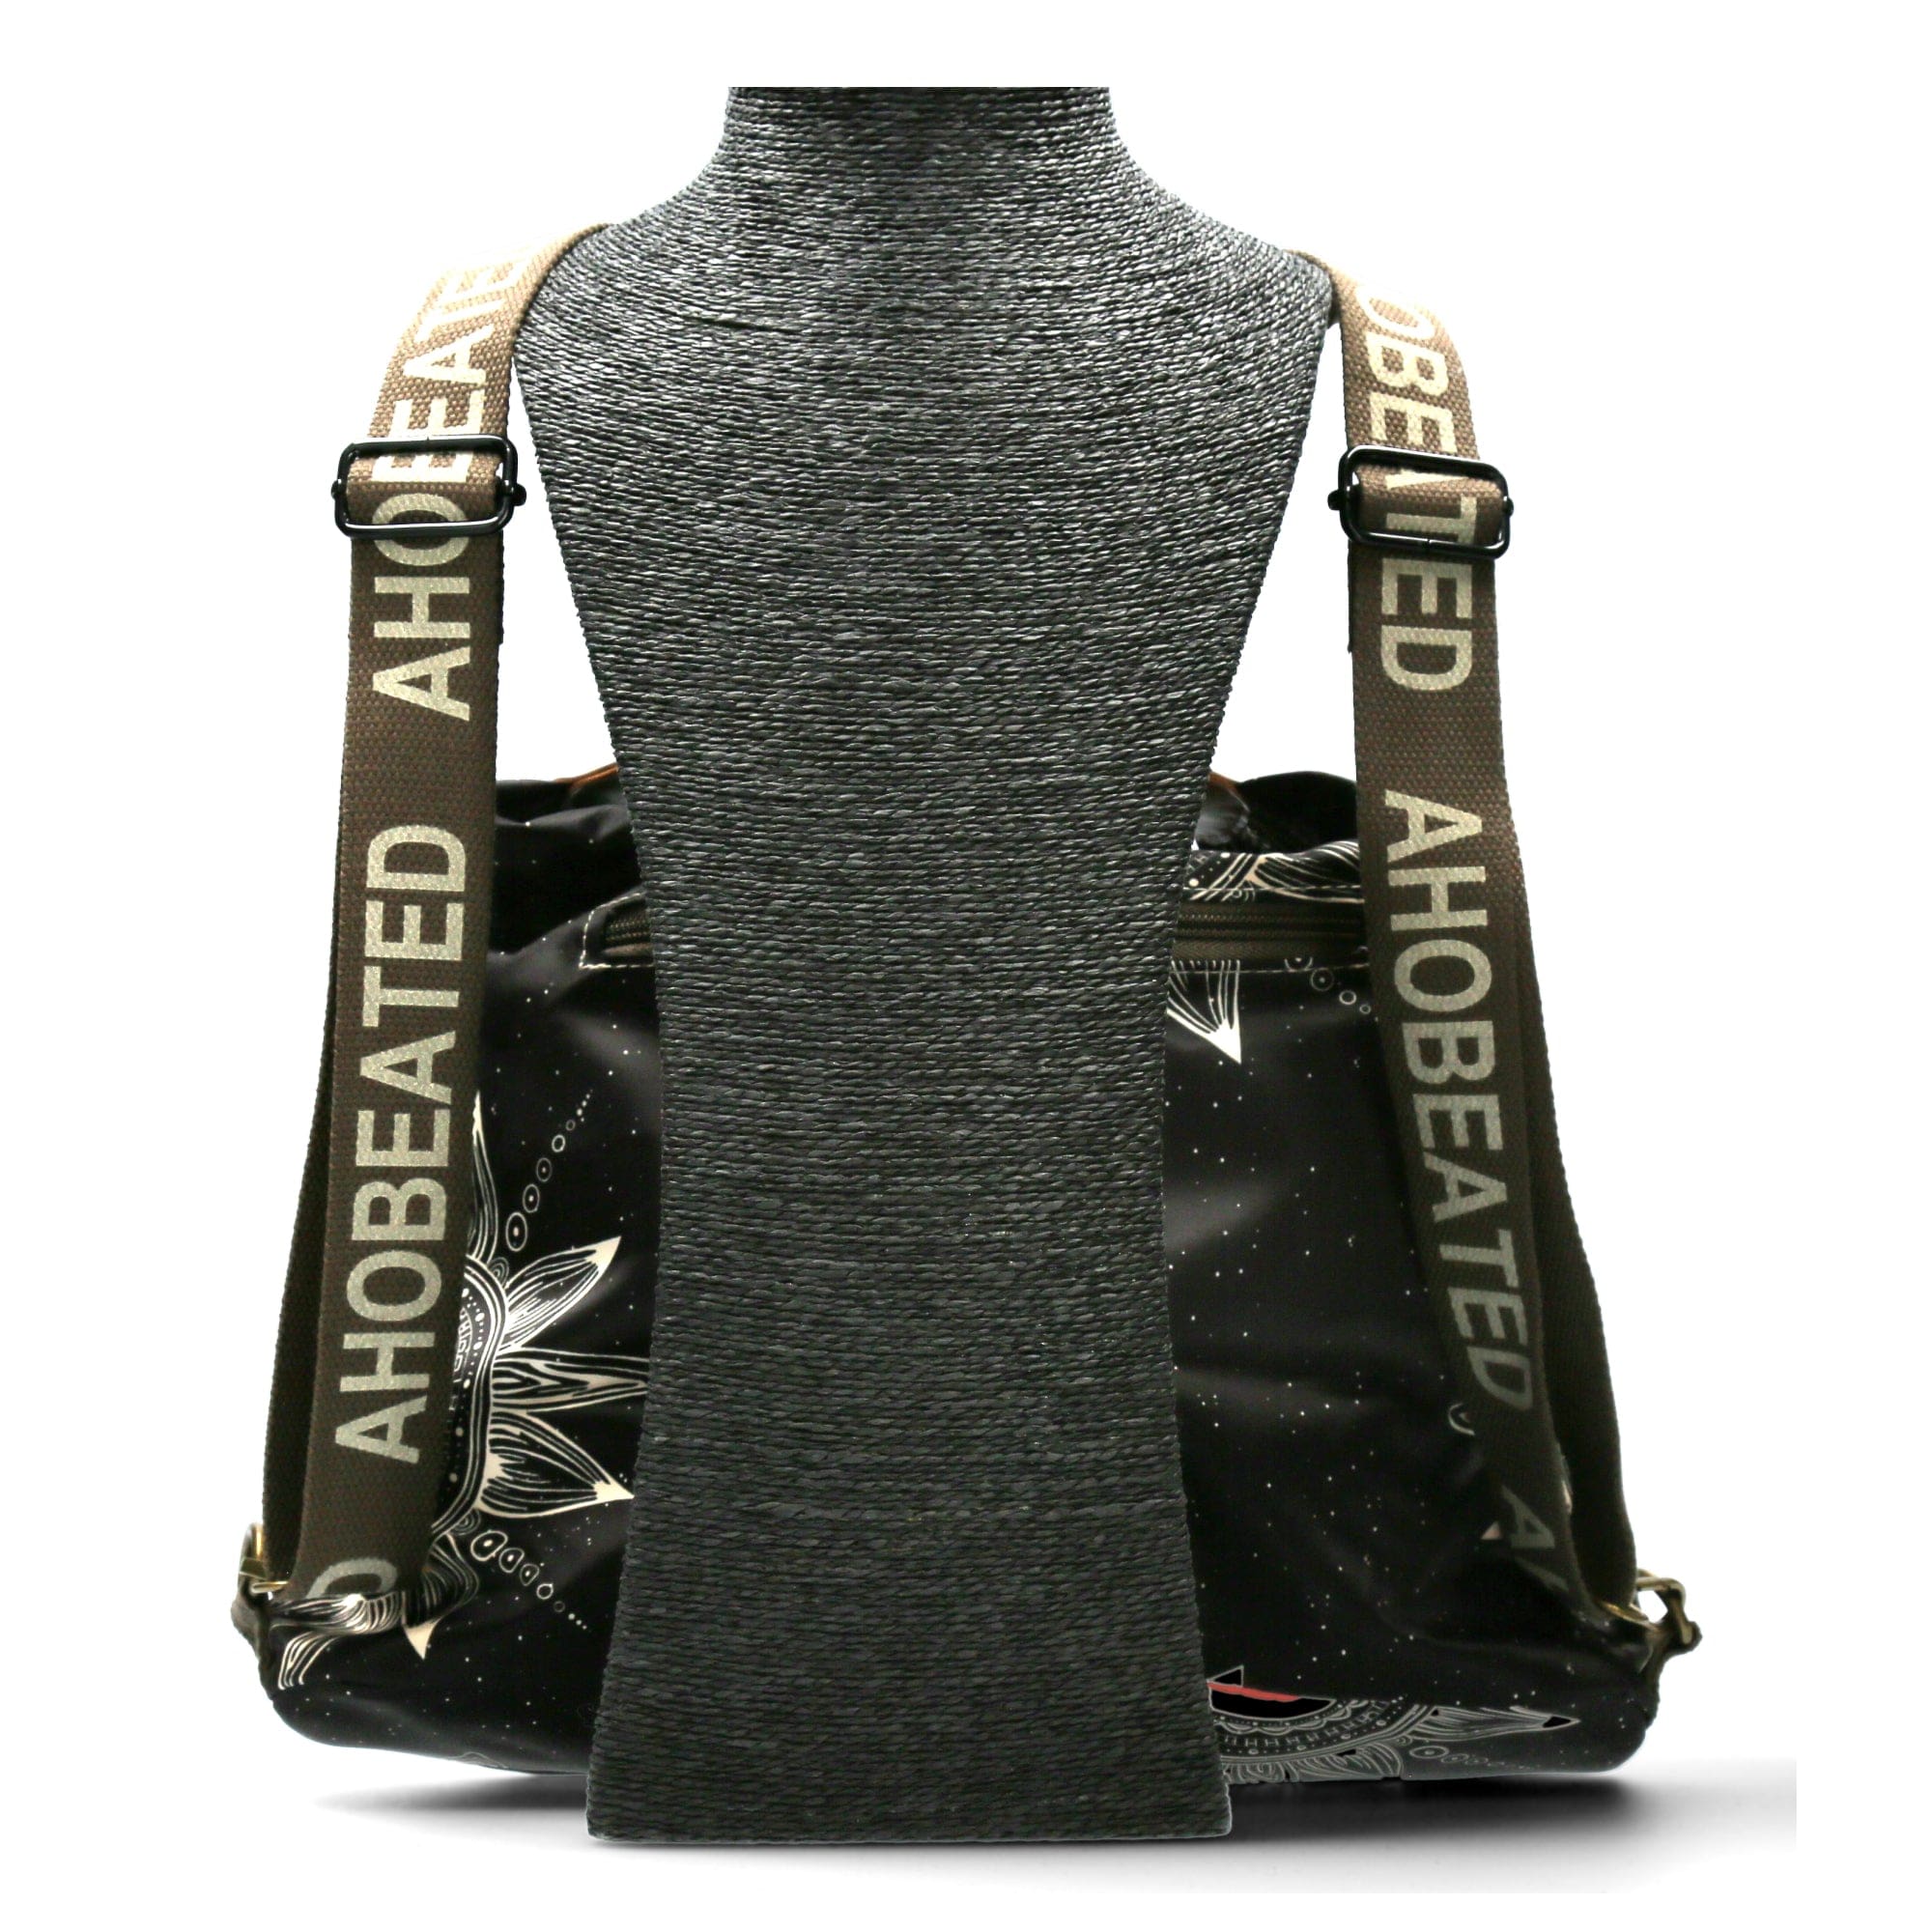 Jill Exclusive Multi Bag - Taske